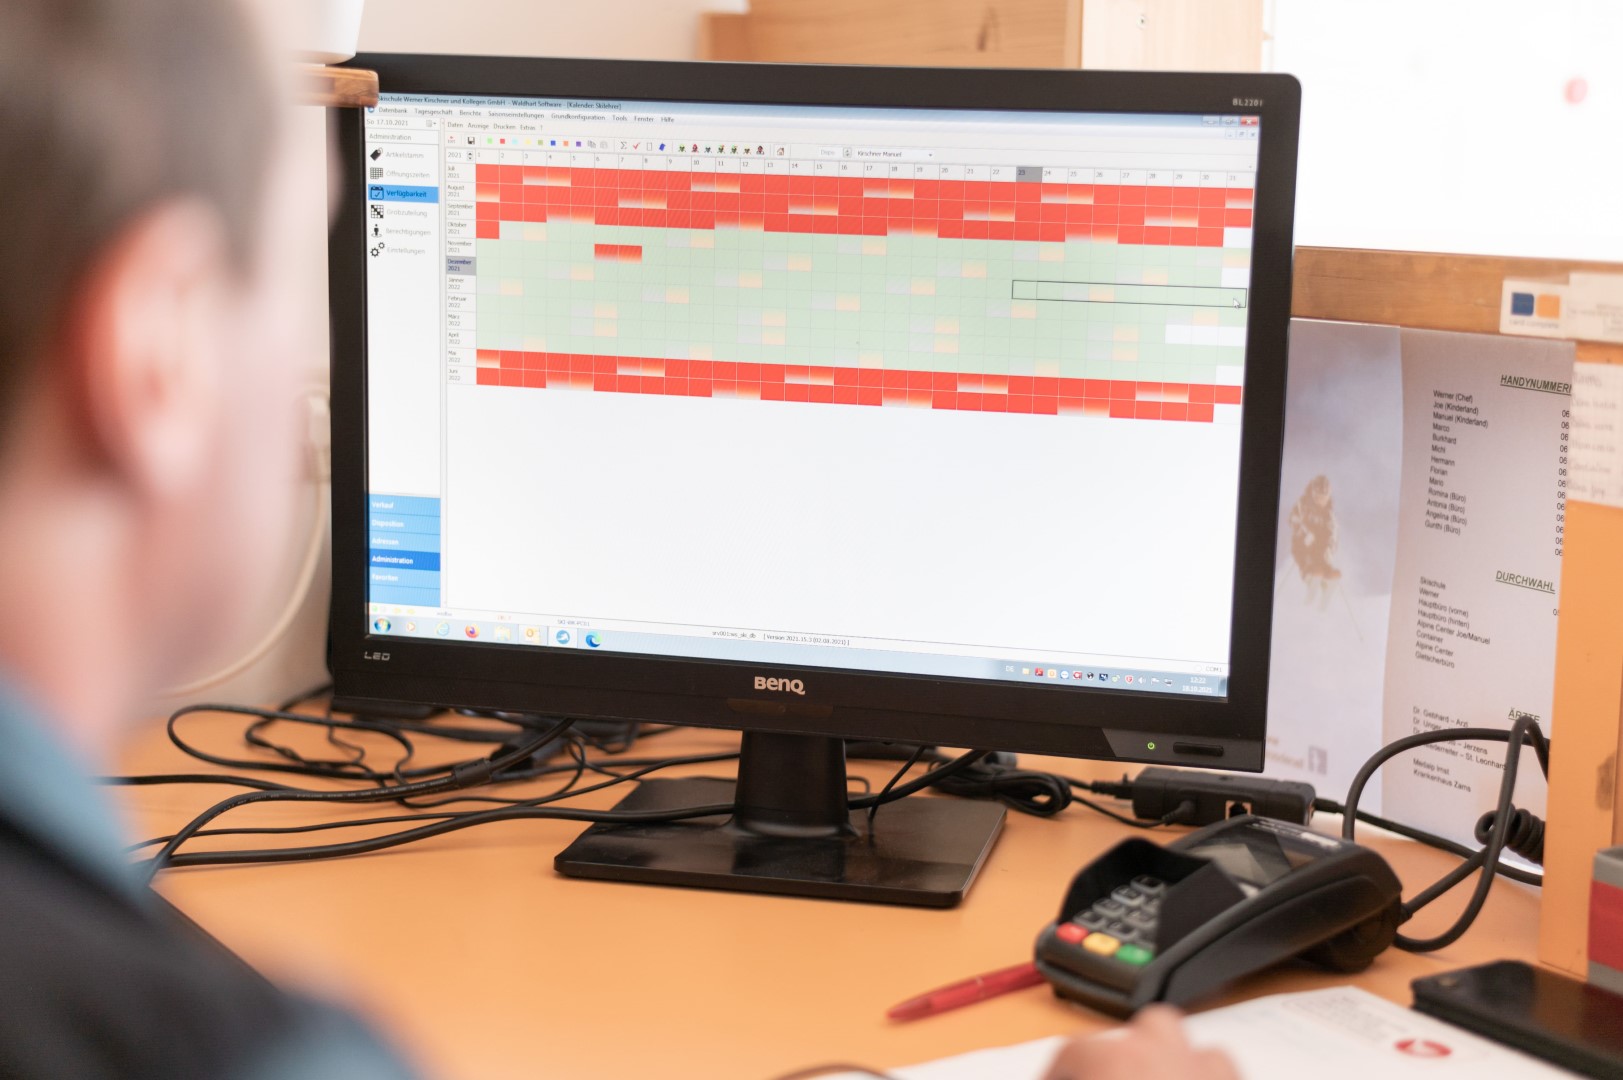 Working with ski school software calendar in the ski school office